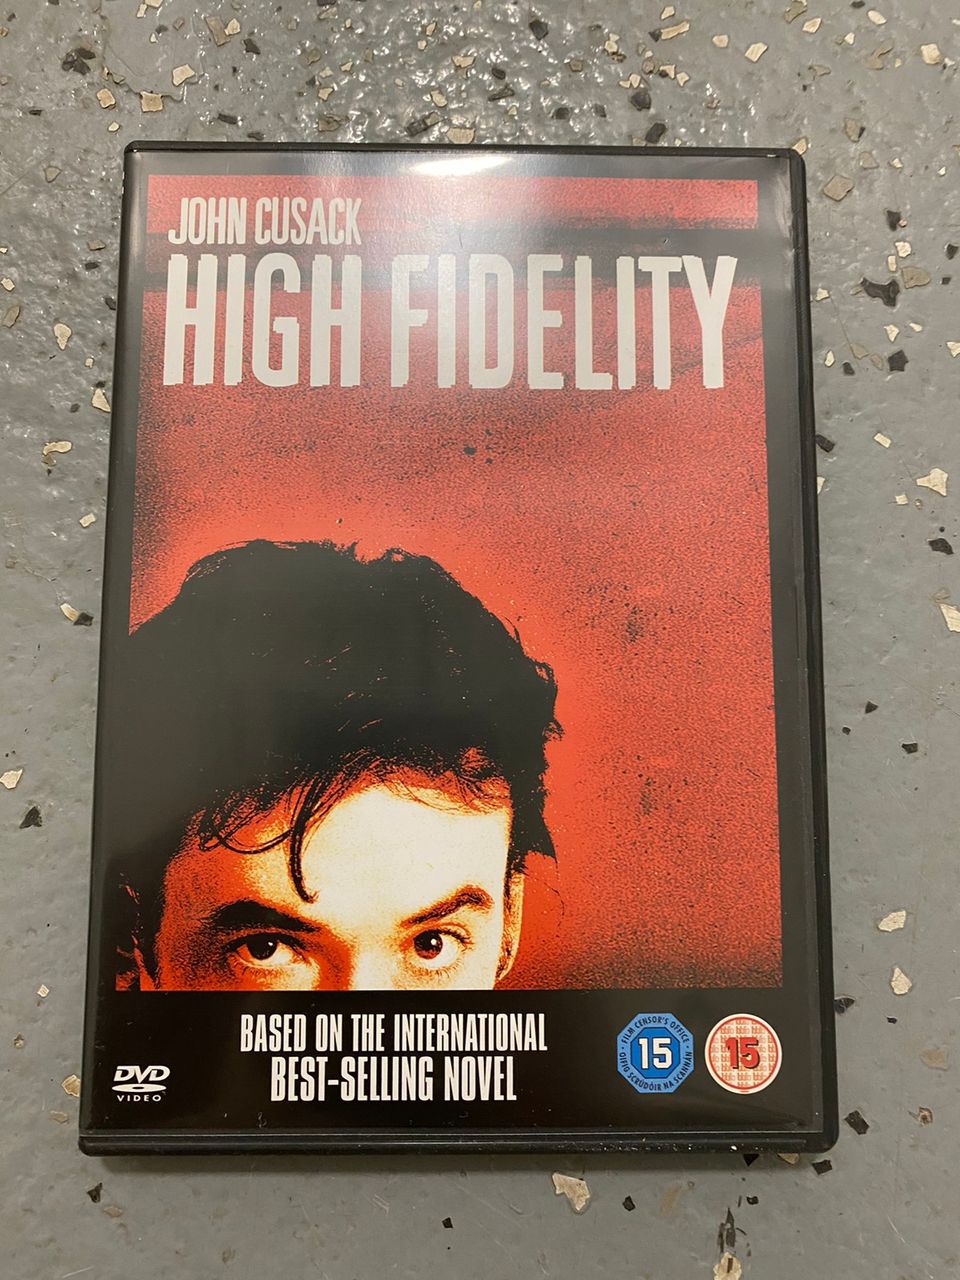 High fidelity dvd